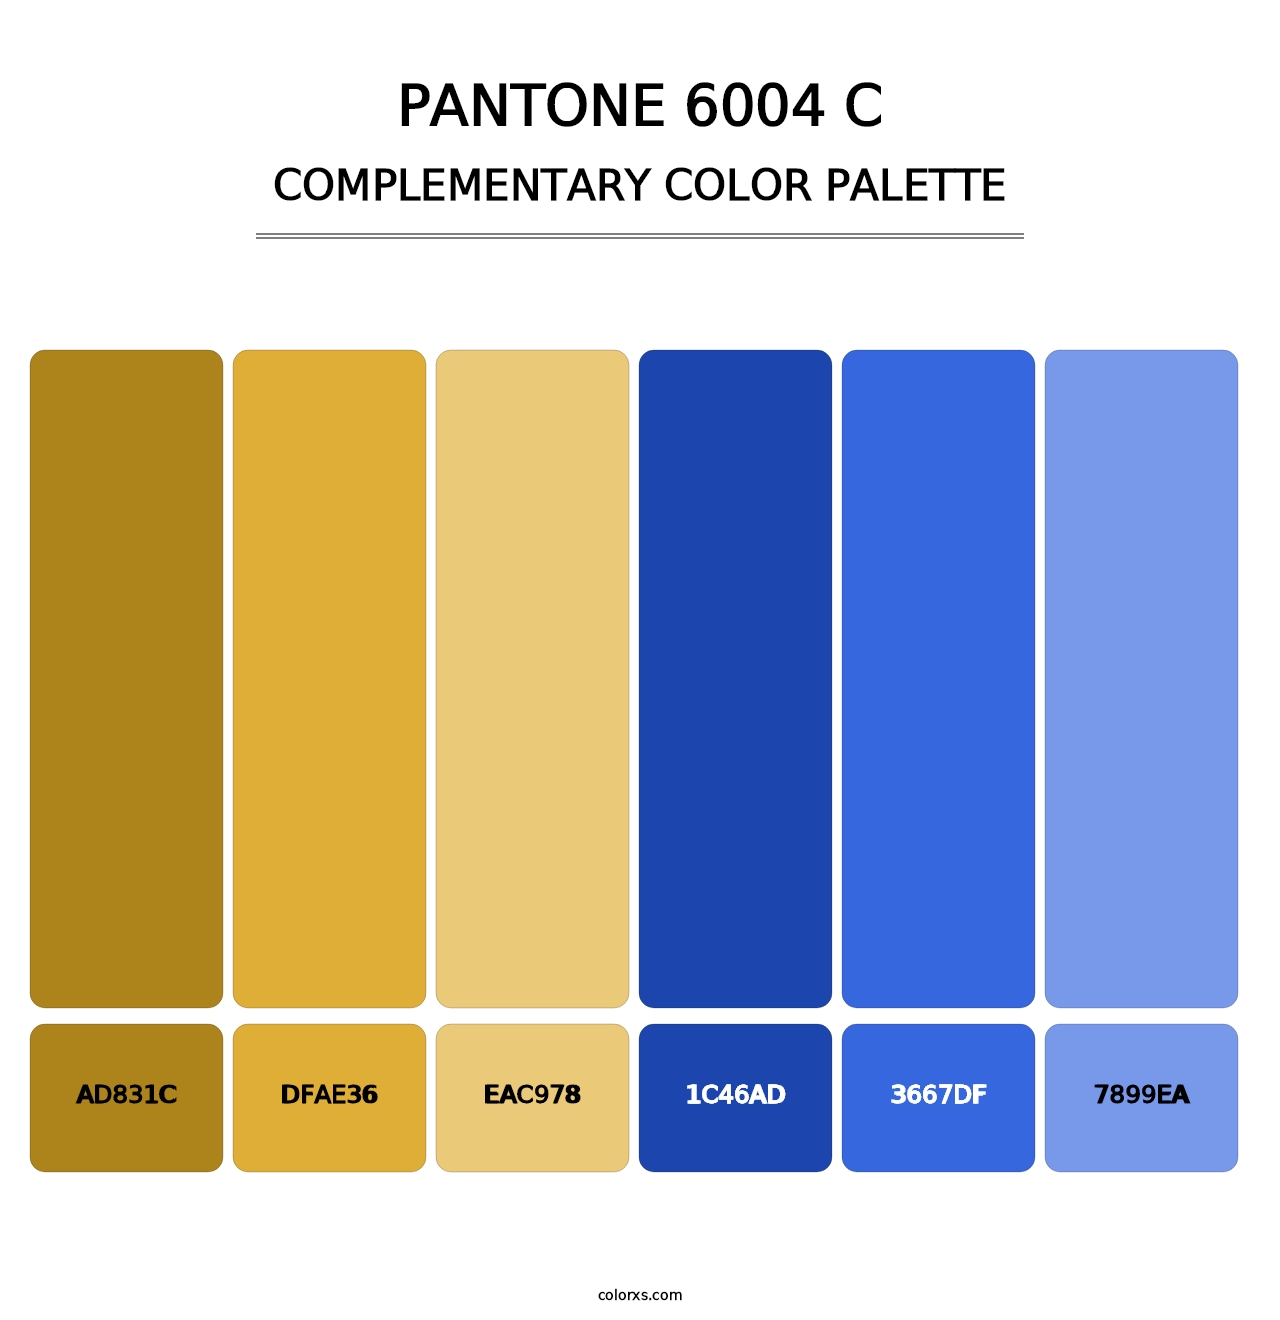 PANTONE 6004 C - Complementary Color Palette